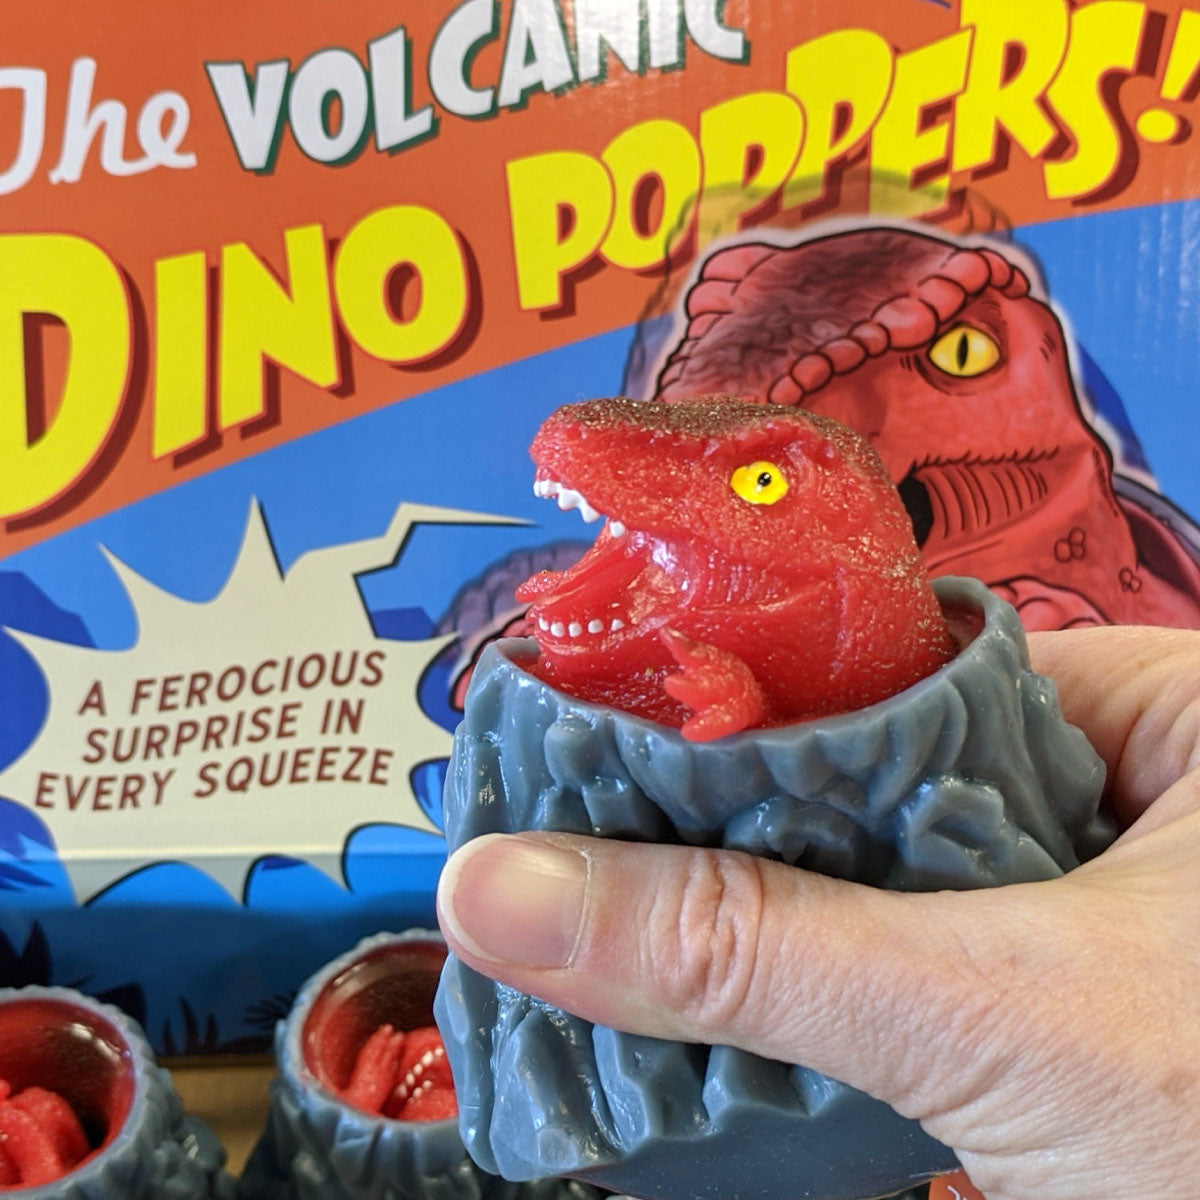 Volcanic Dino Popper from Schylling